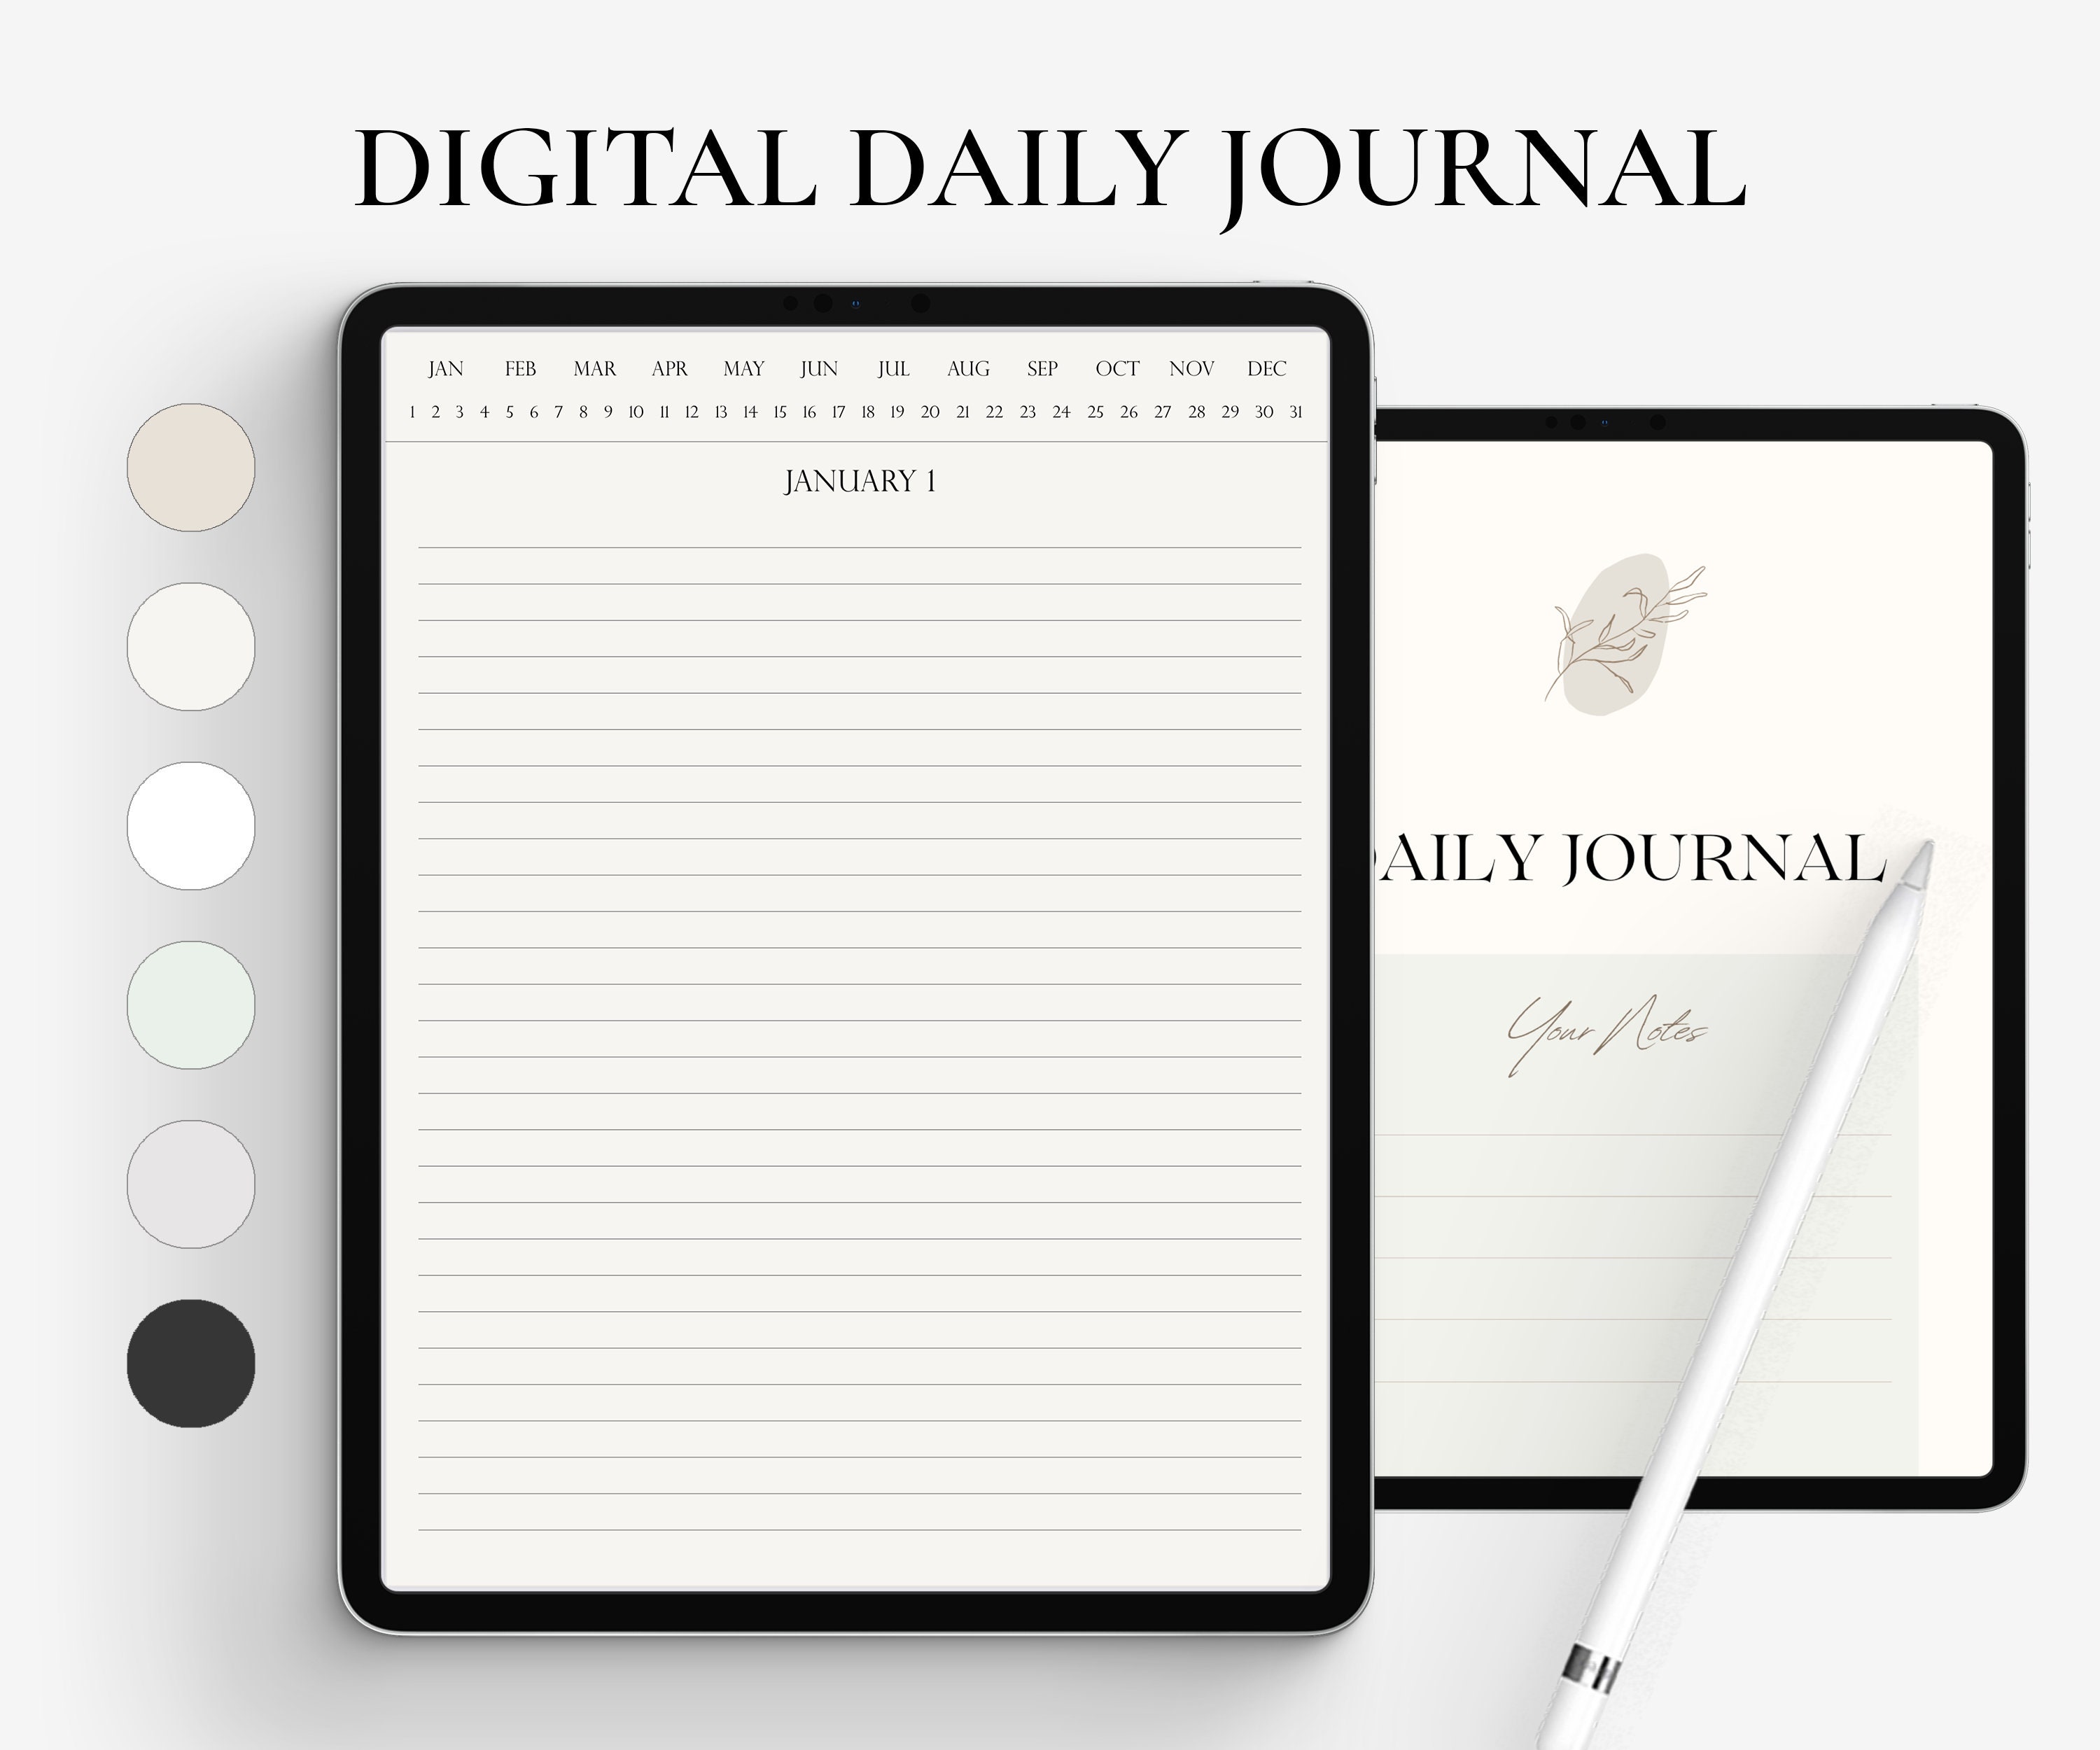 Digital Daily Journal, Goodnotes Journal, Diary Journal, 366 Daily Pages  Journal, iPad Journal, Notabiliity Journal, Digital Diary 